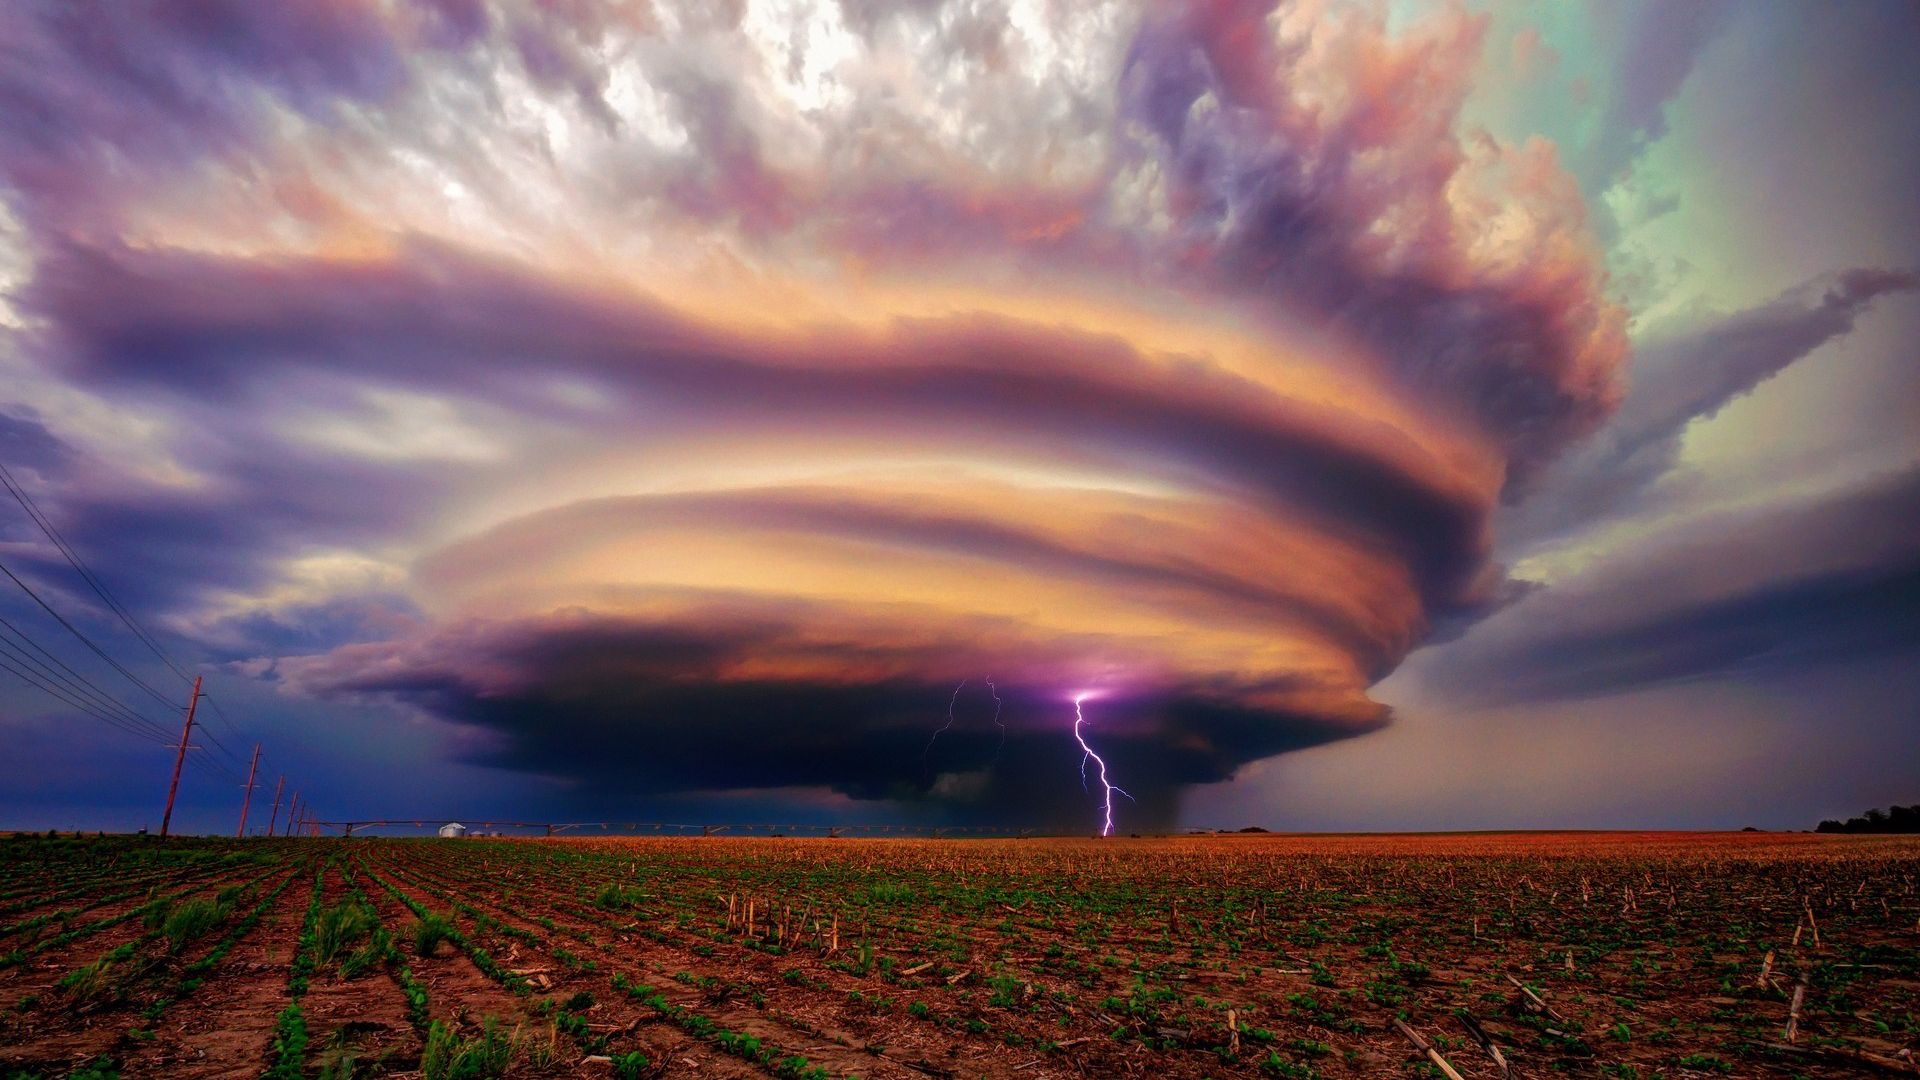 Desktop Wallpaper Storm, Clouds, Landscape, Nature, Lightning, Hd Image,  Picture, Background, B9kxjl